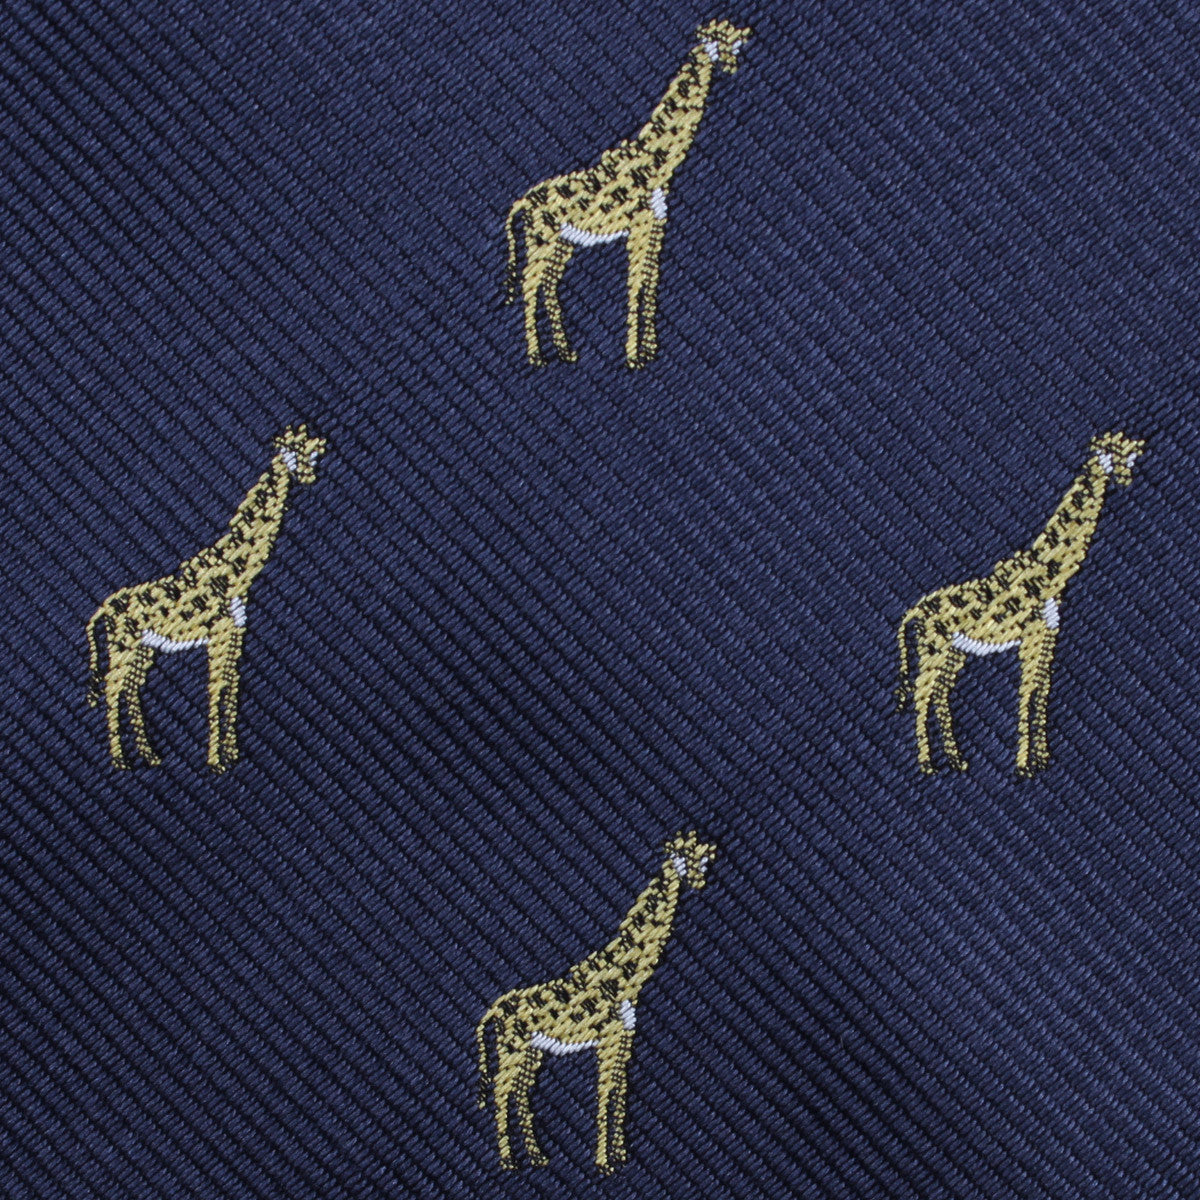 Giraffe Fabric Pocket Square